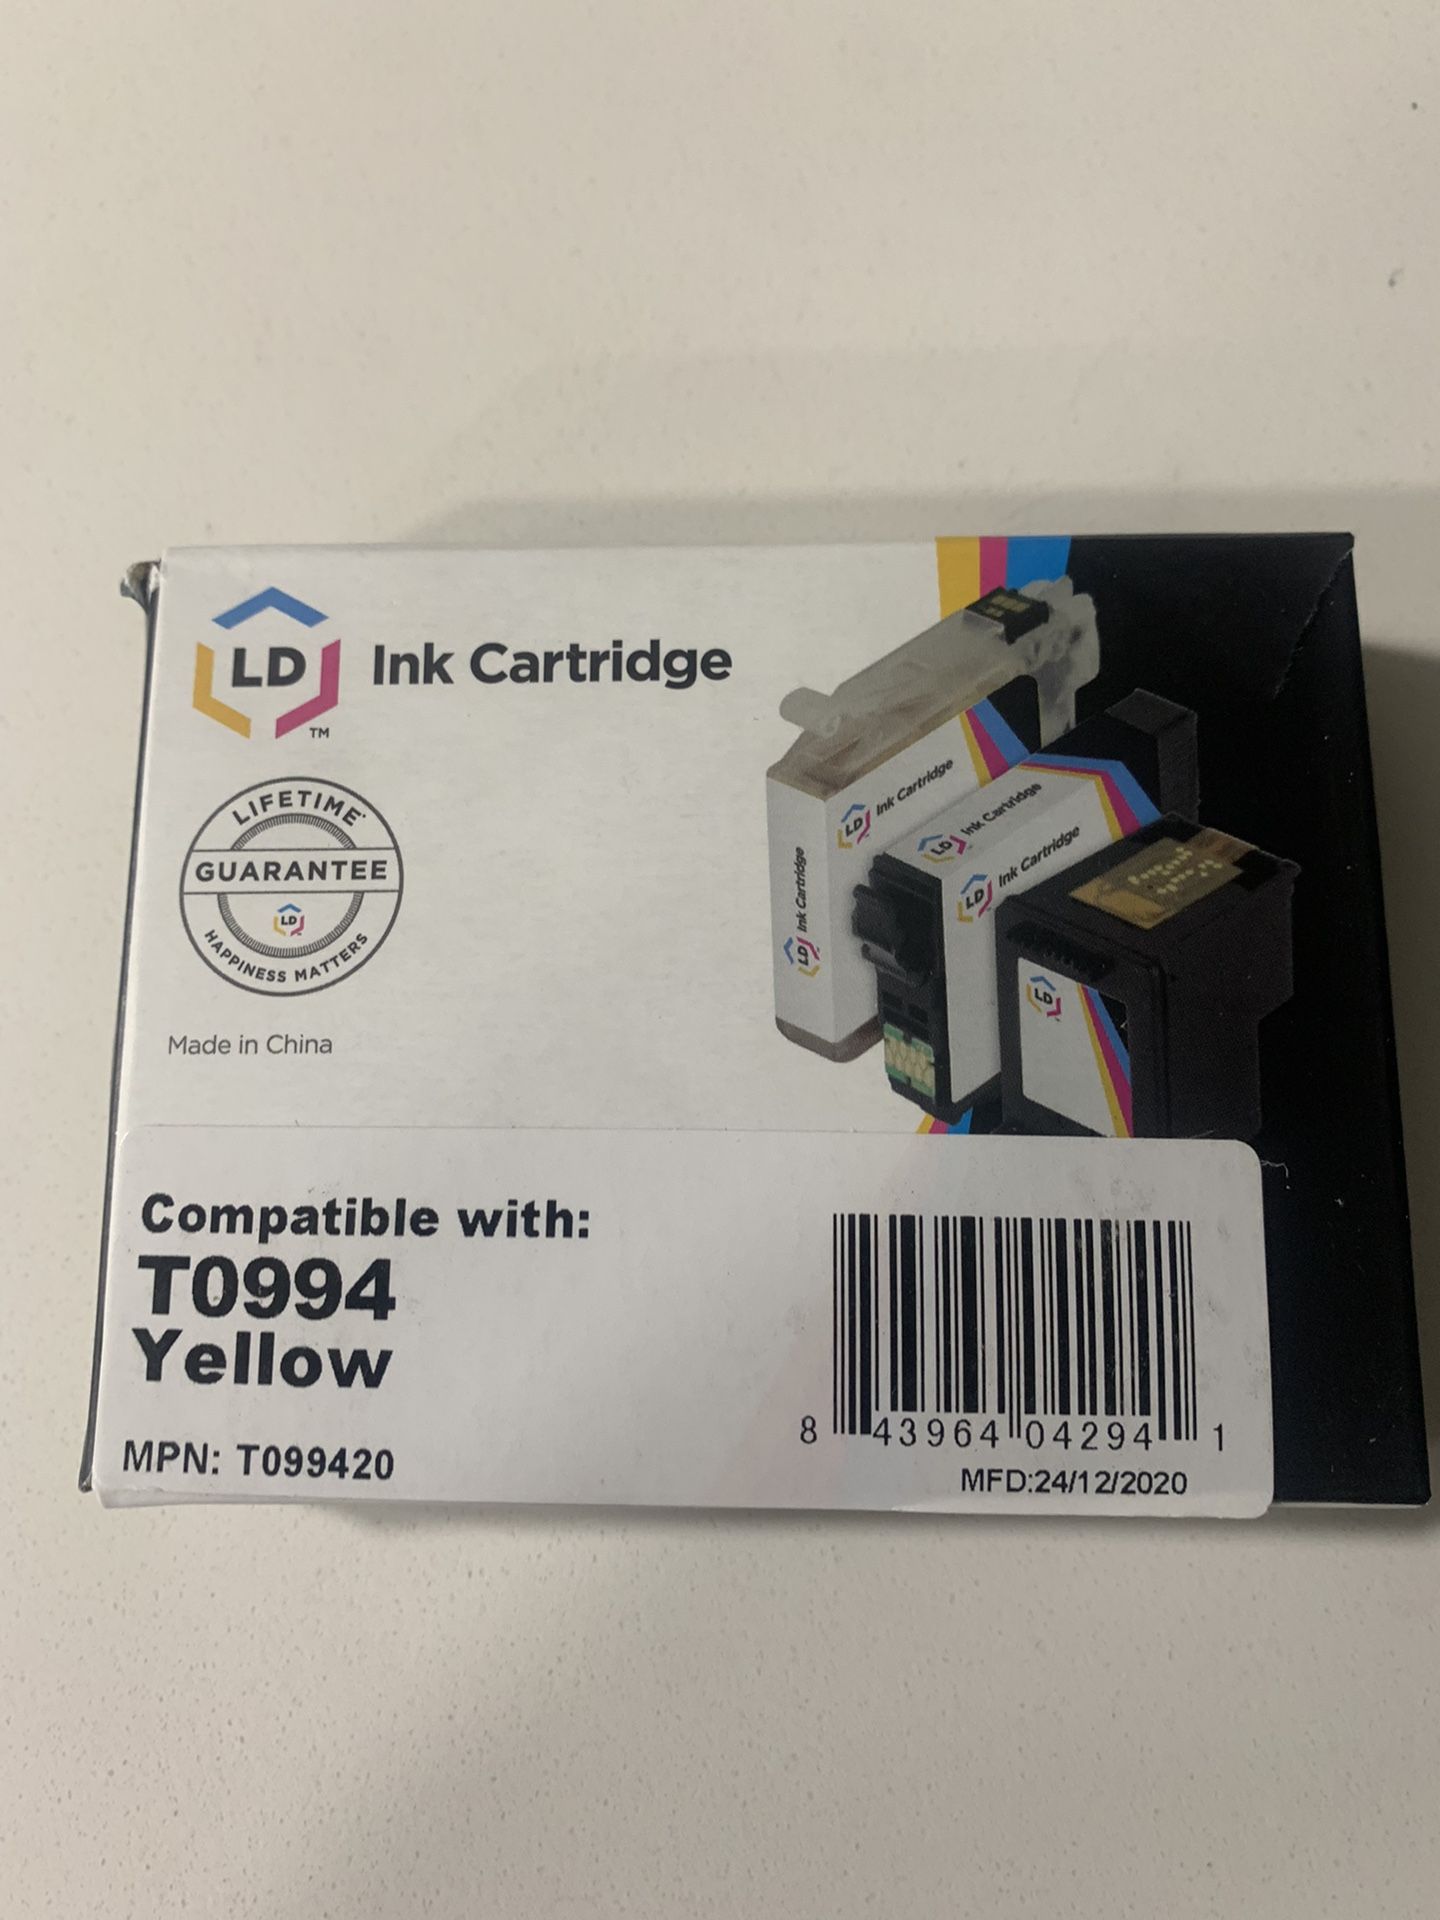 LD Ink Cartridge